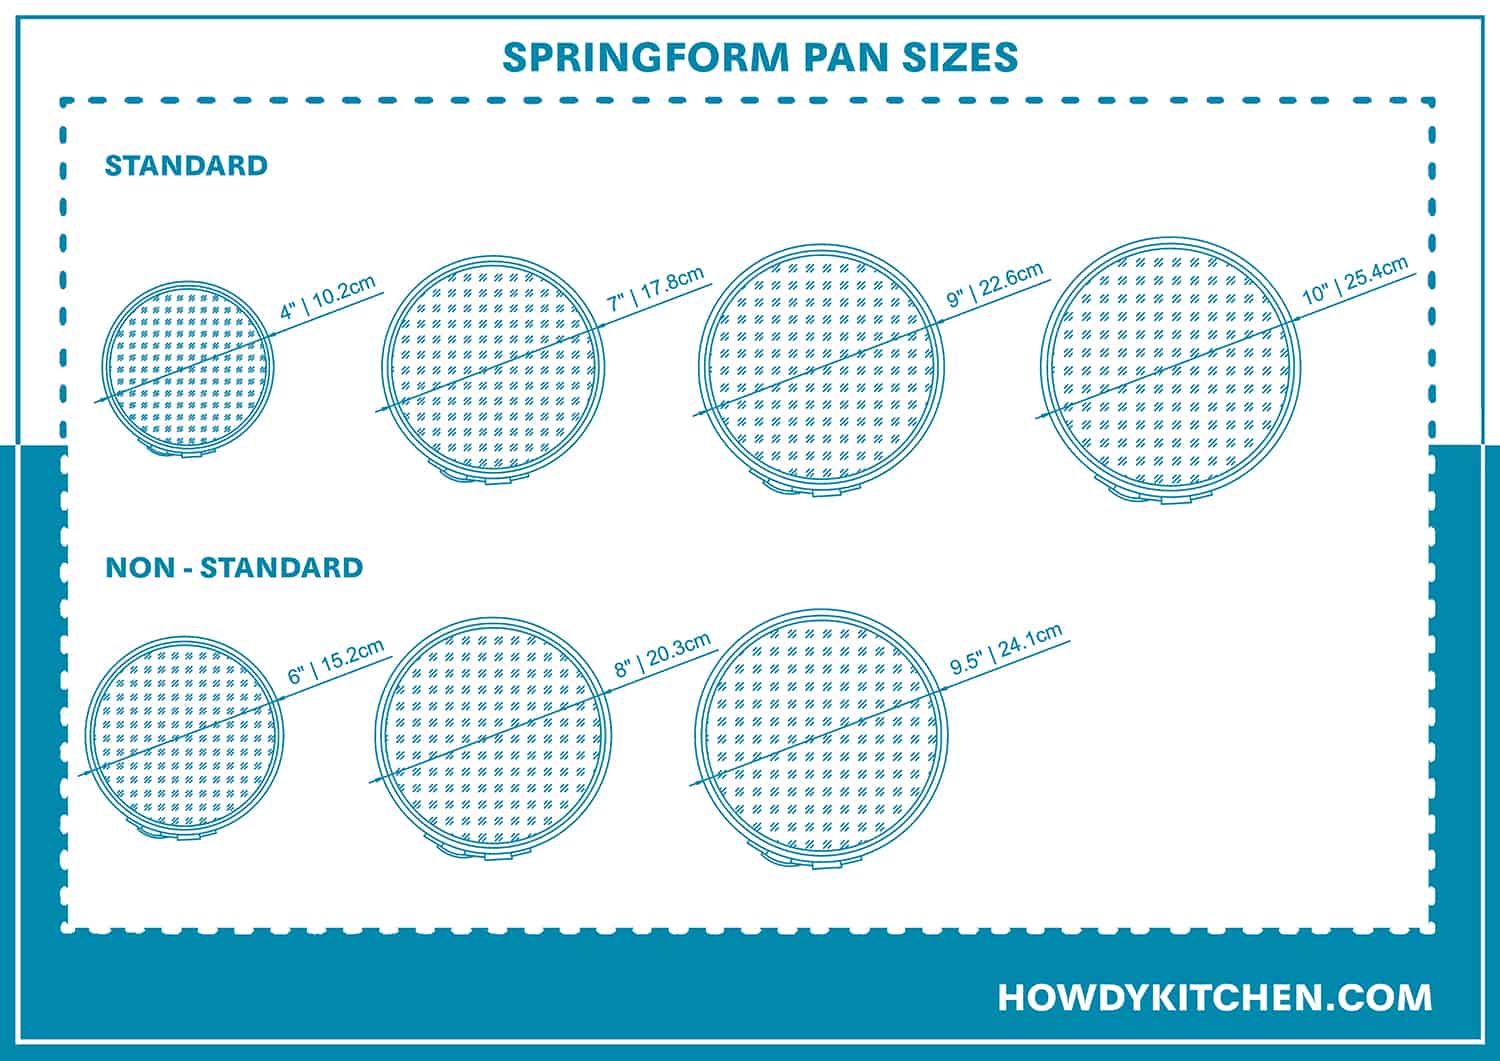 Standard Springform Pan Diameter Sizes